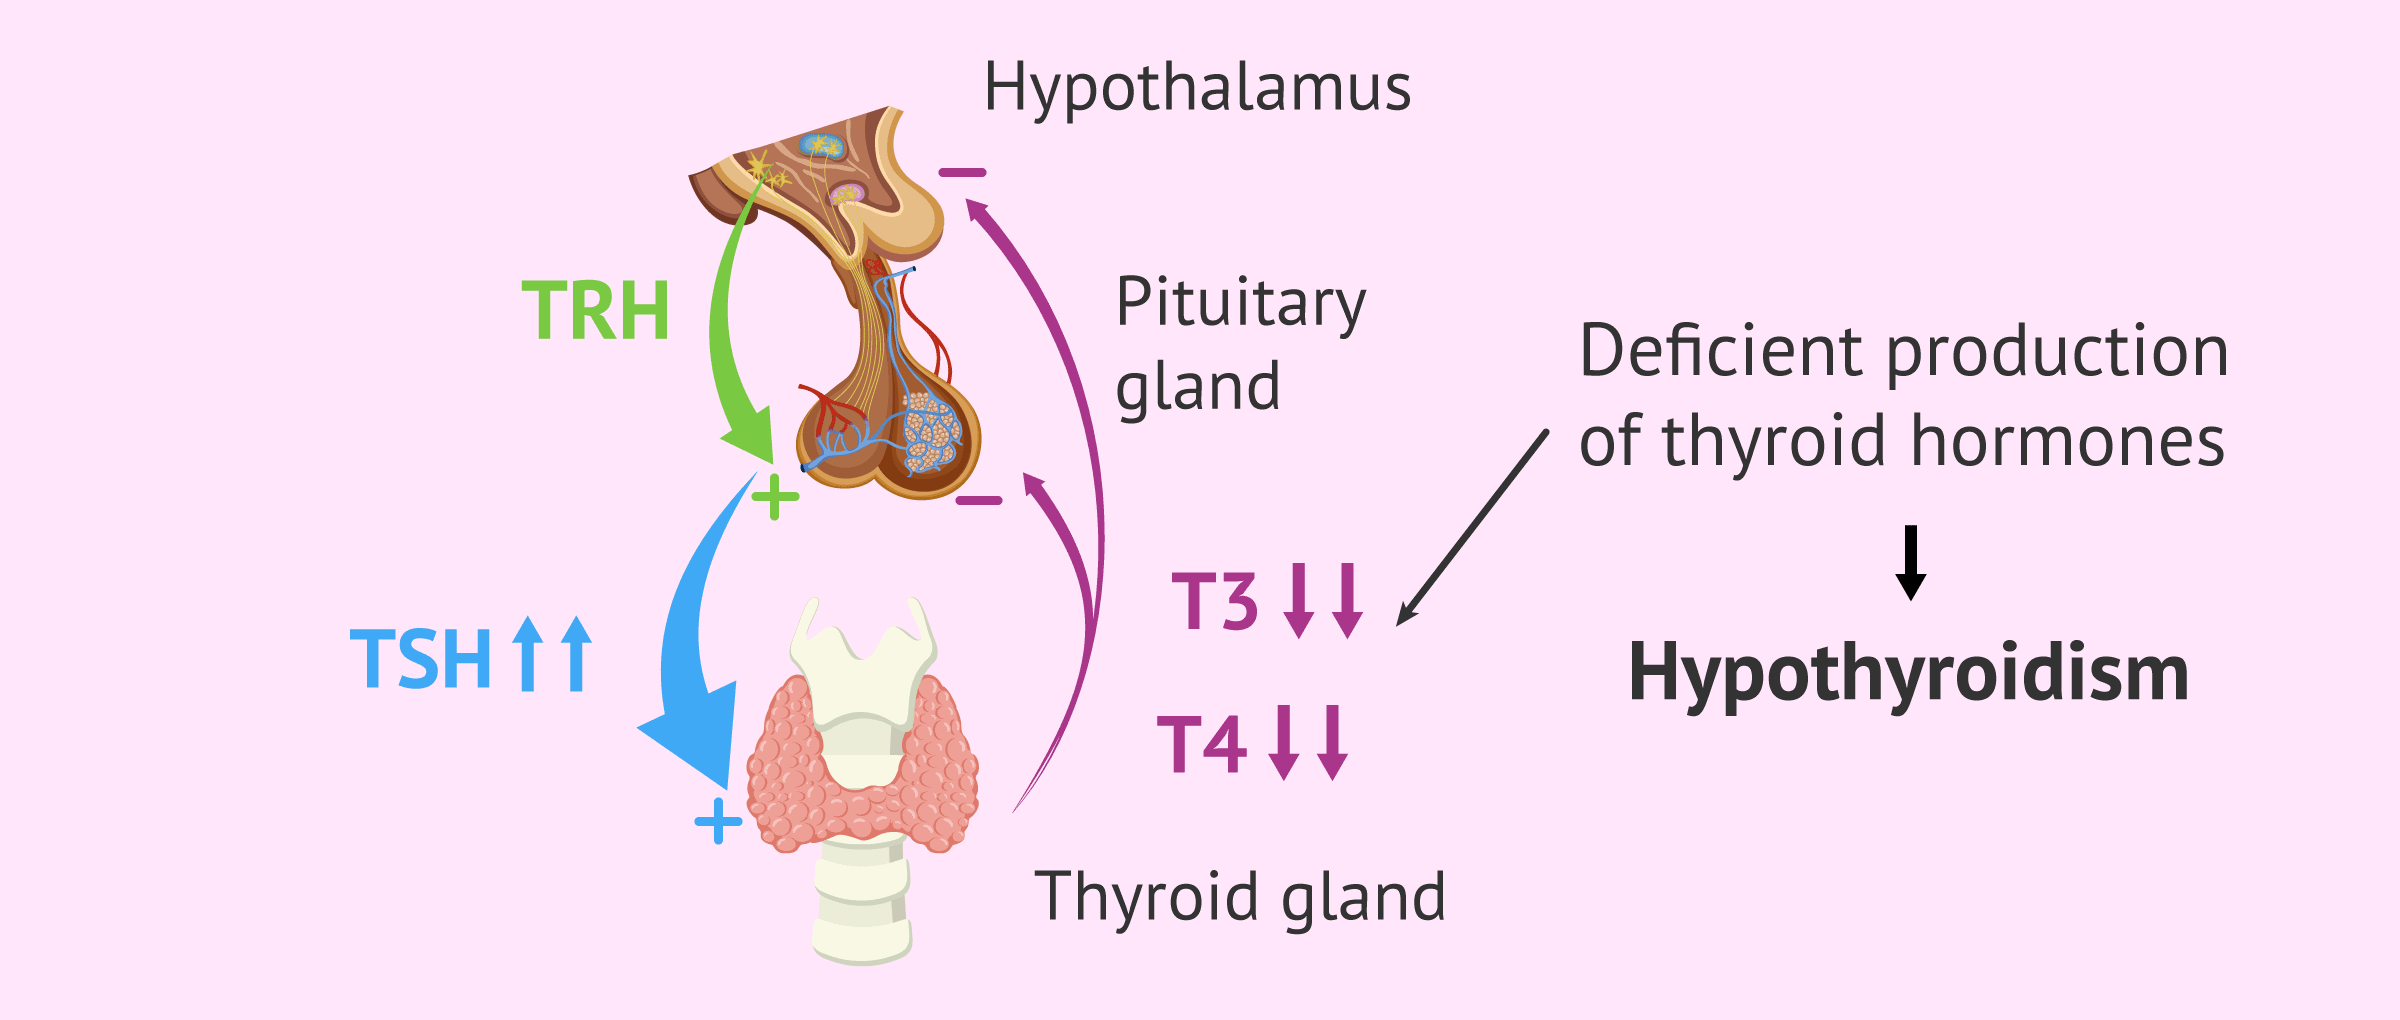 Hypothyroidism and TSH levels